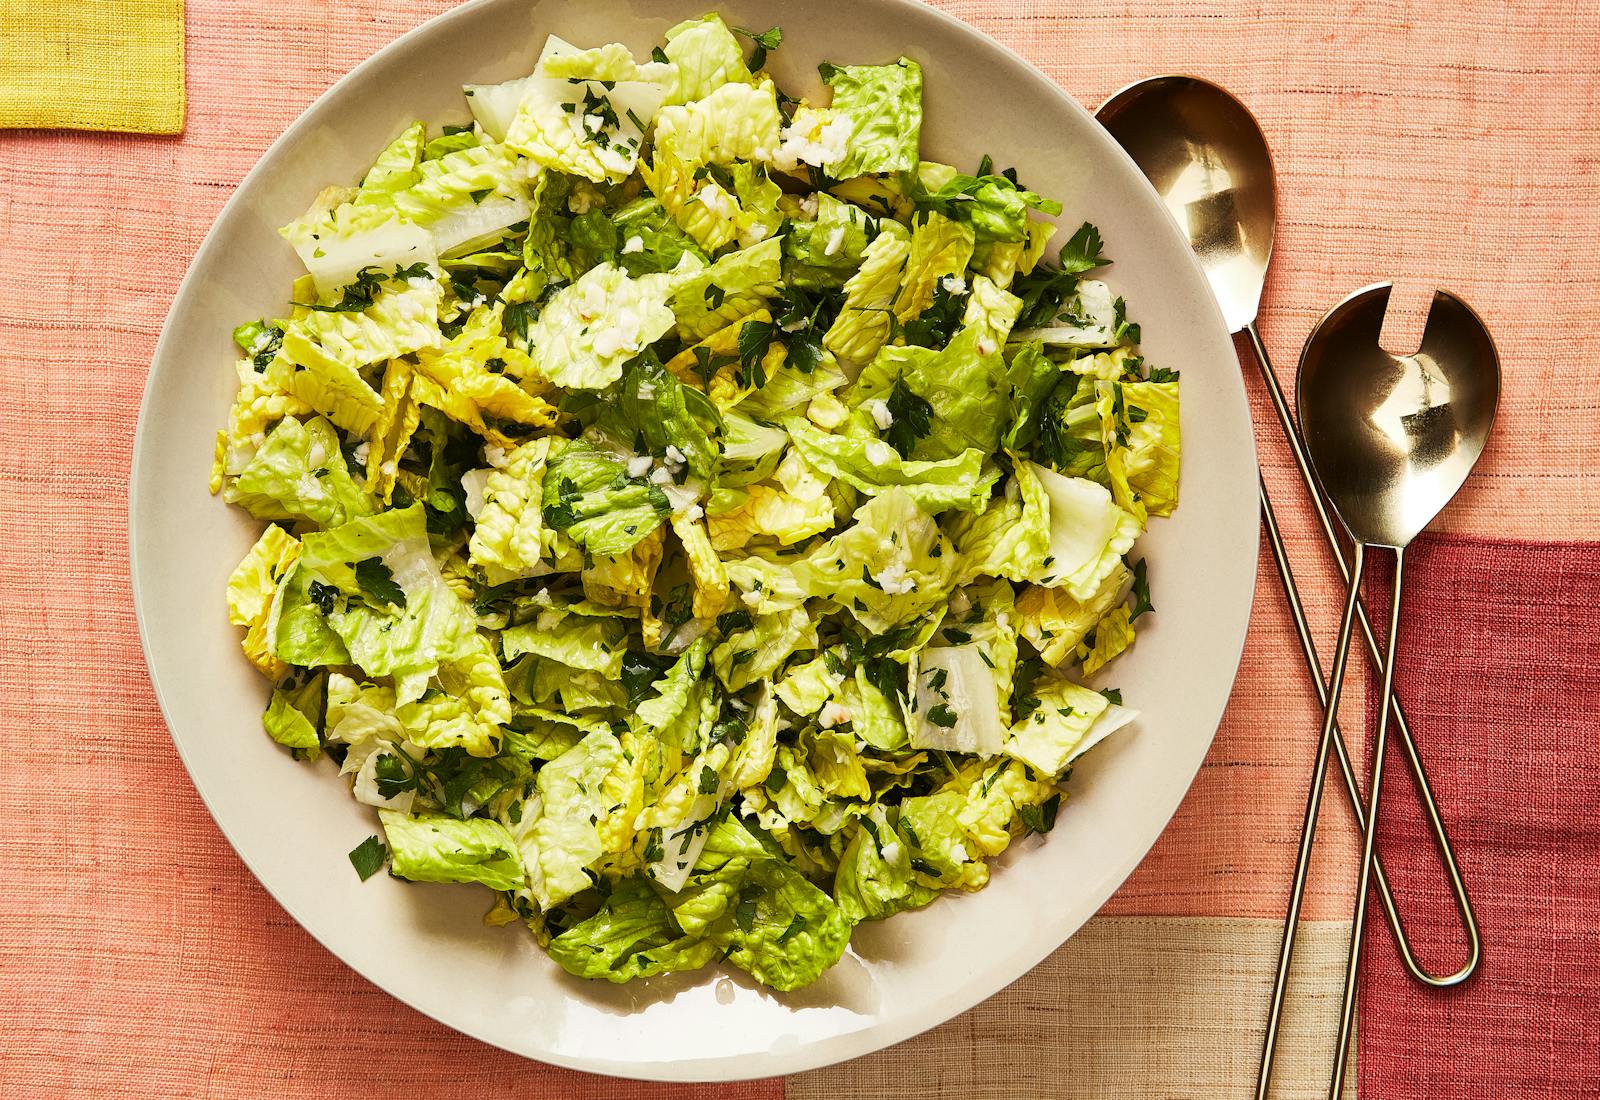 Lettuce and parsley salad alongside serveware.